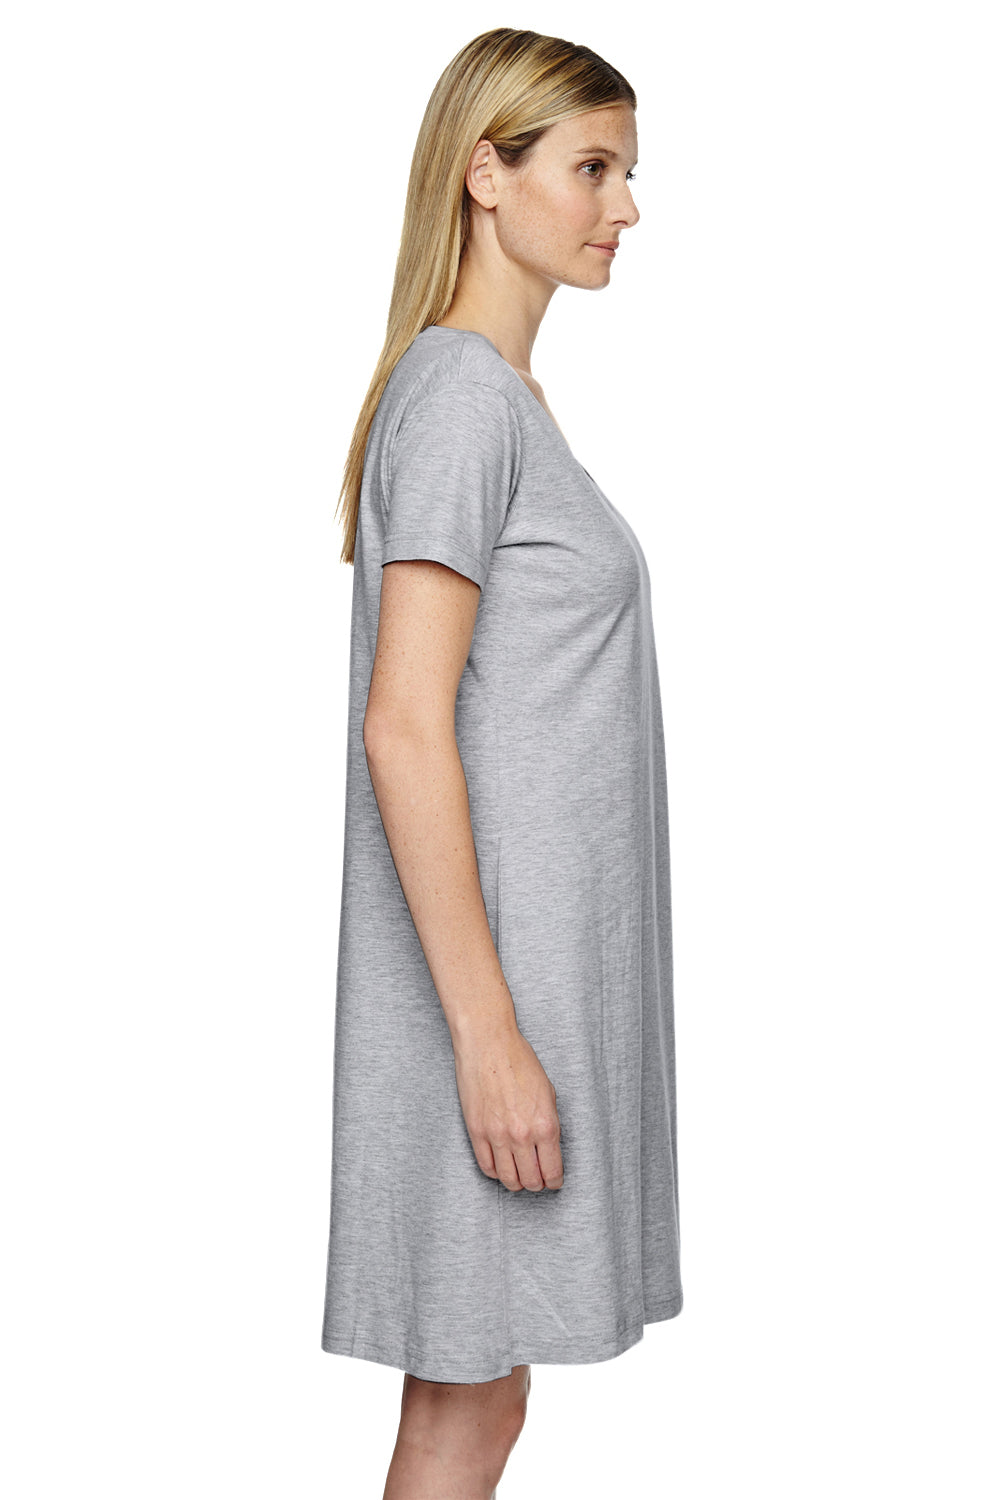 LAT 3522 Womens Short Sleeve T-Shirt Dress Heather Grey Side